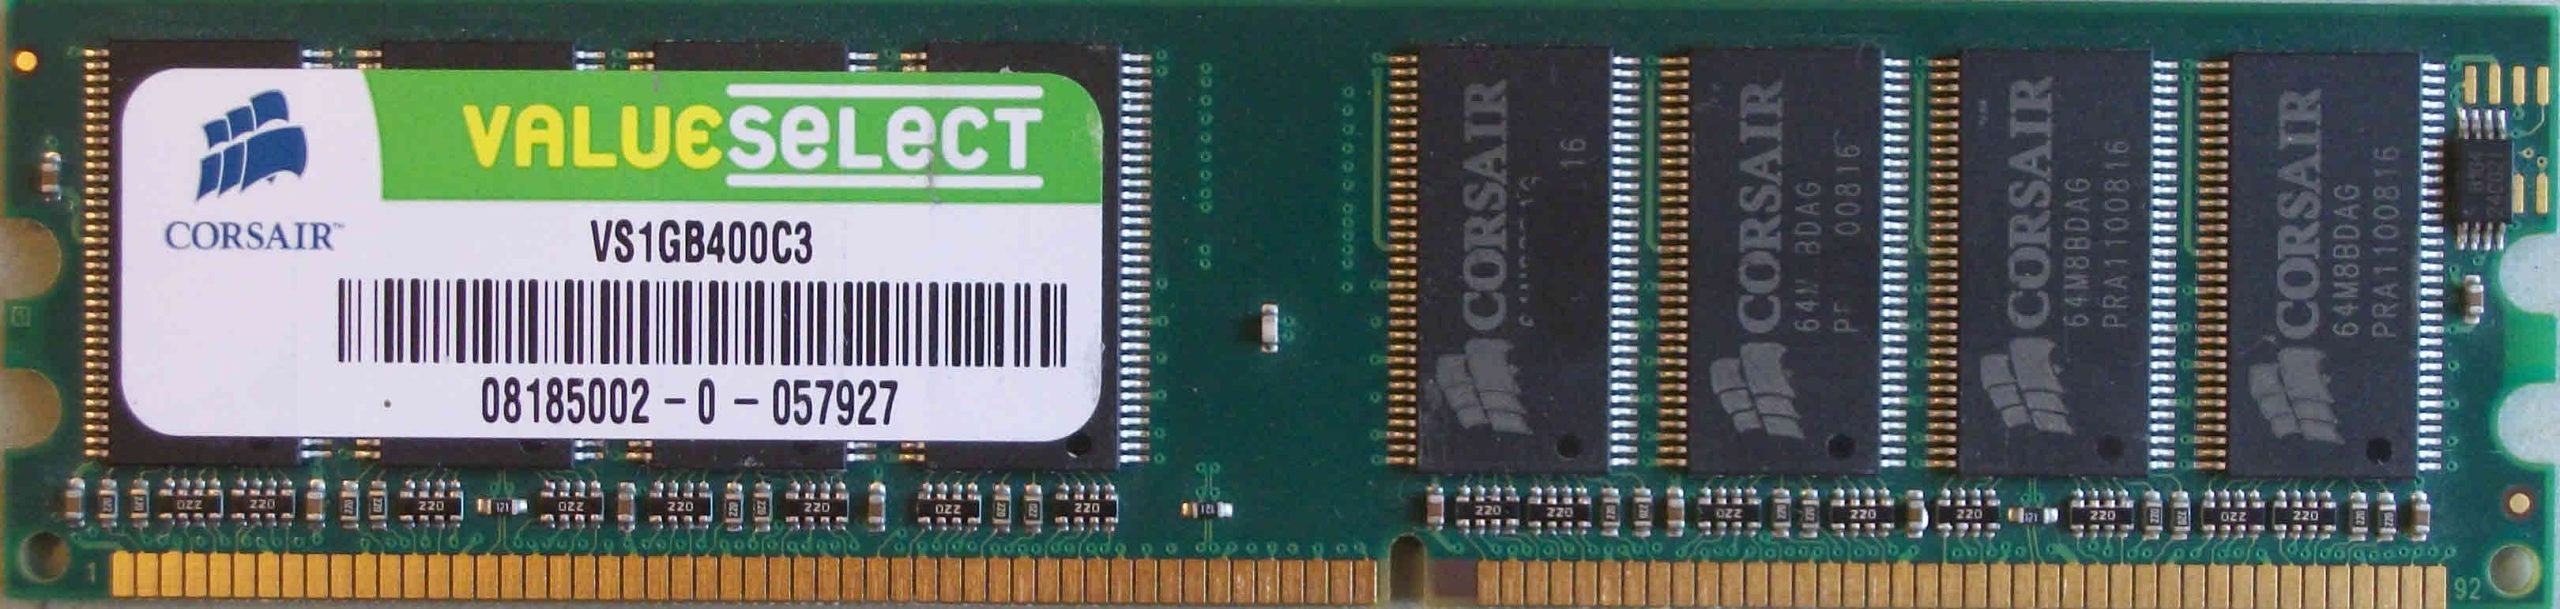 Corsair 1GB PC3200U 400MHz 184pins ValueSelect